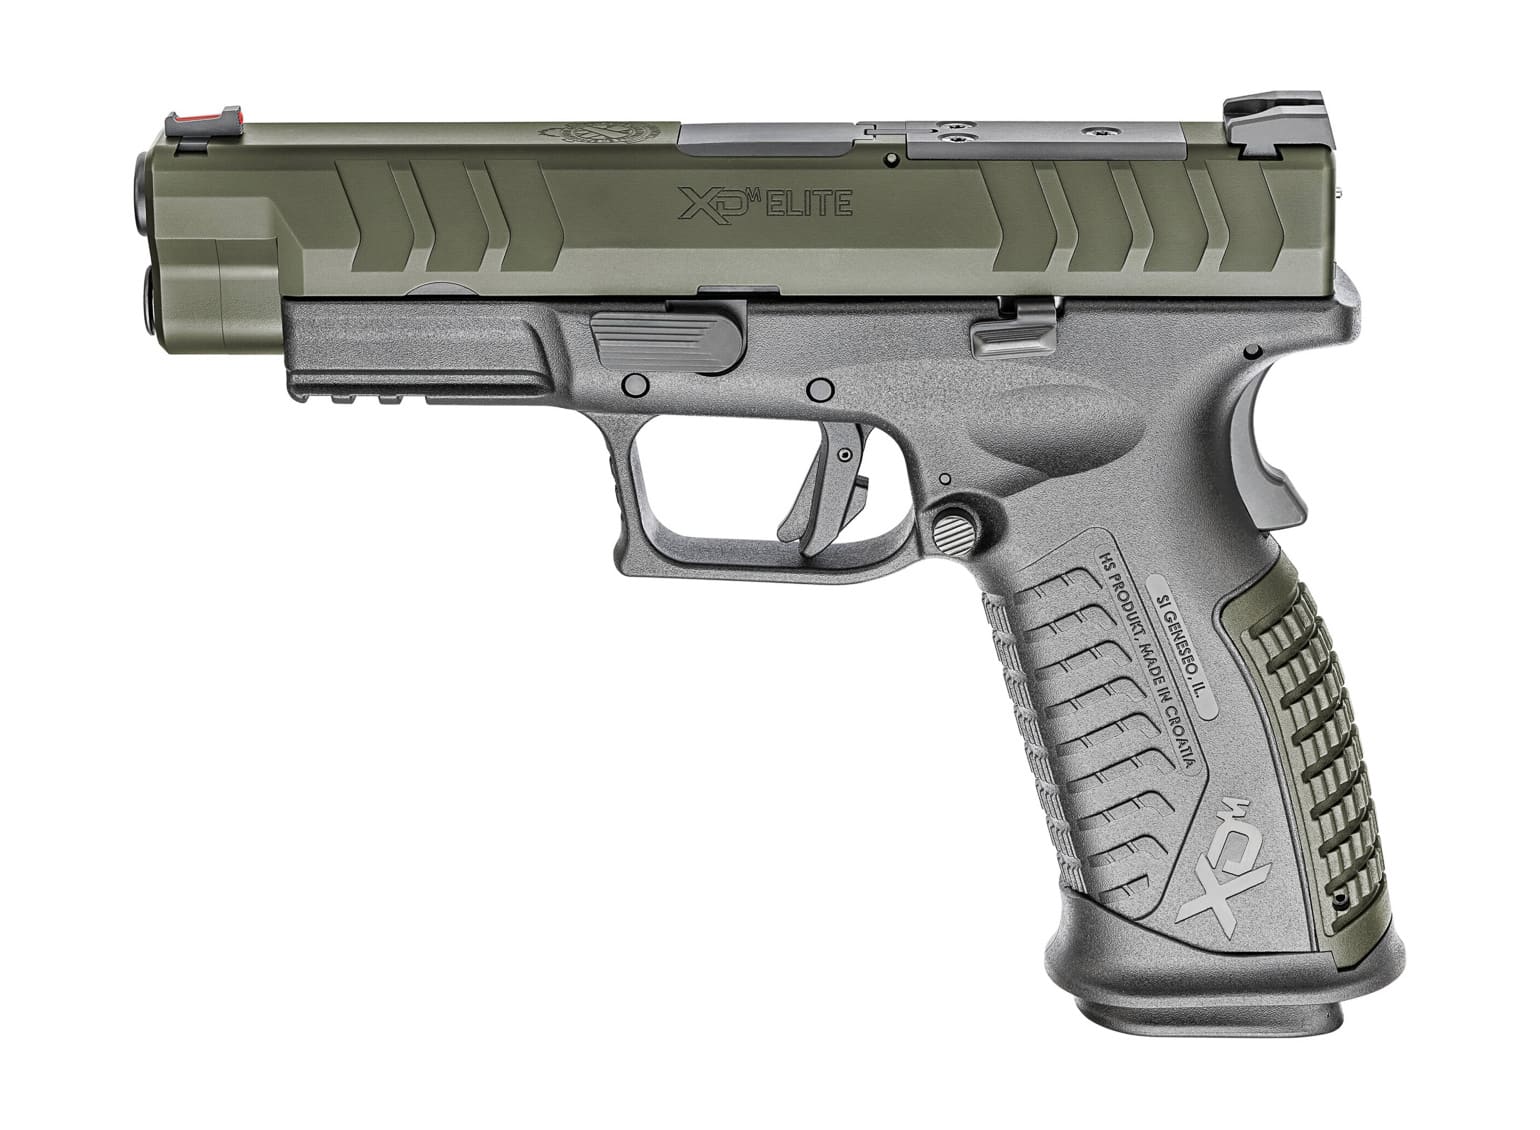 xd-m elite 9mm od green pistol